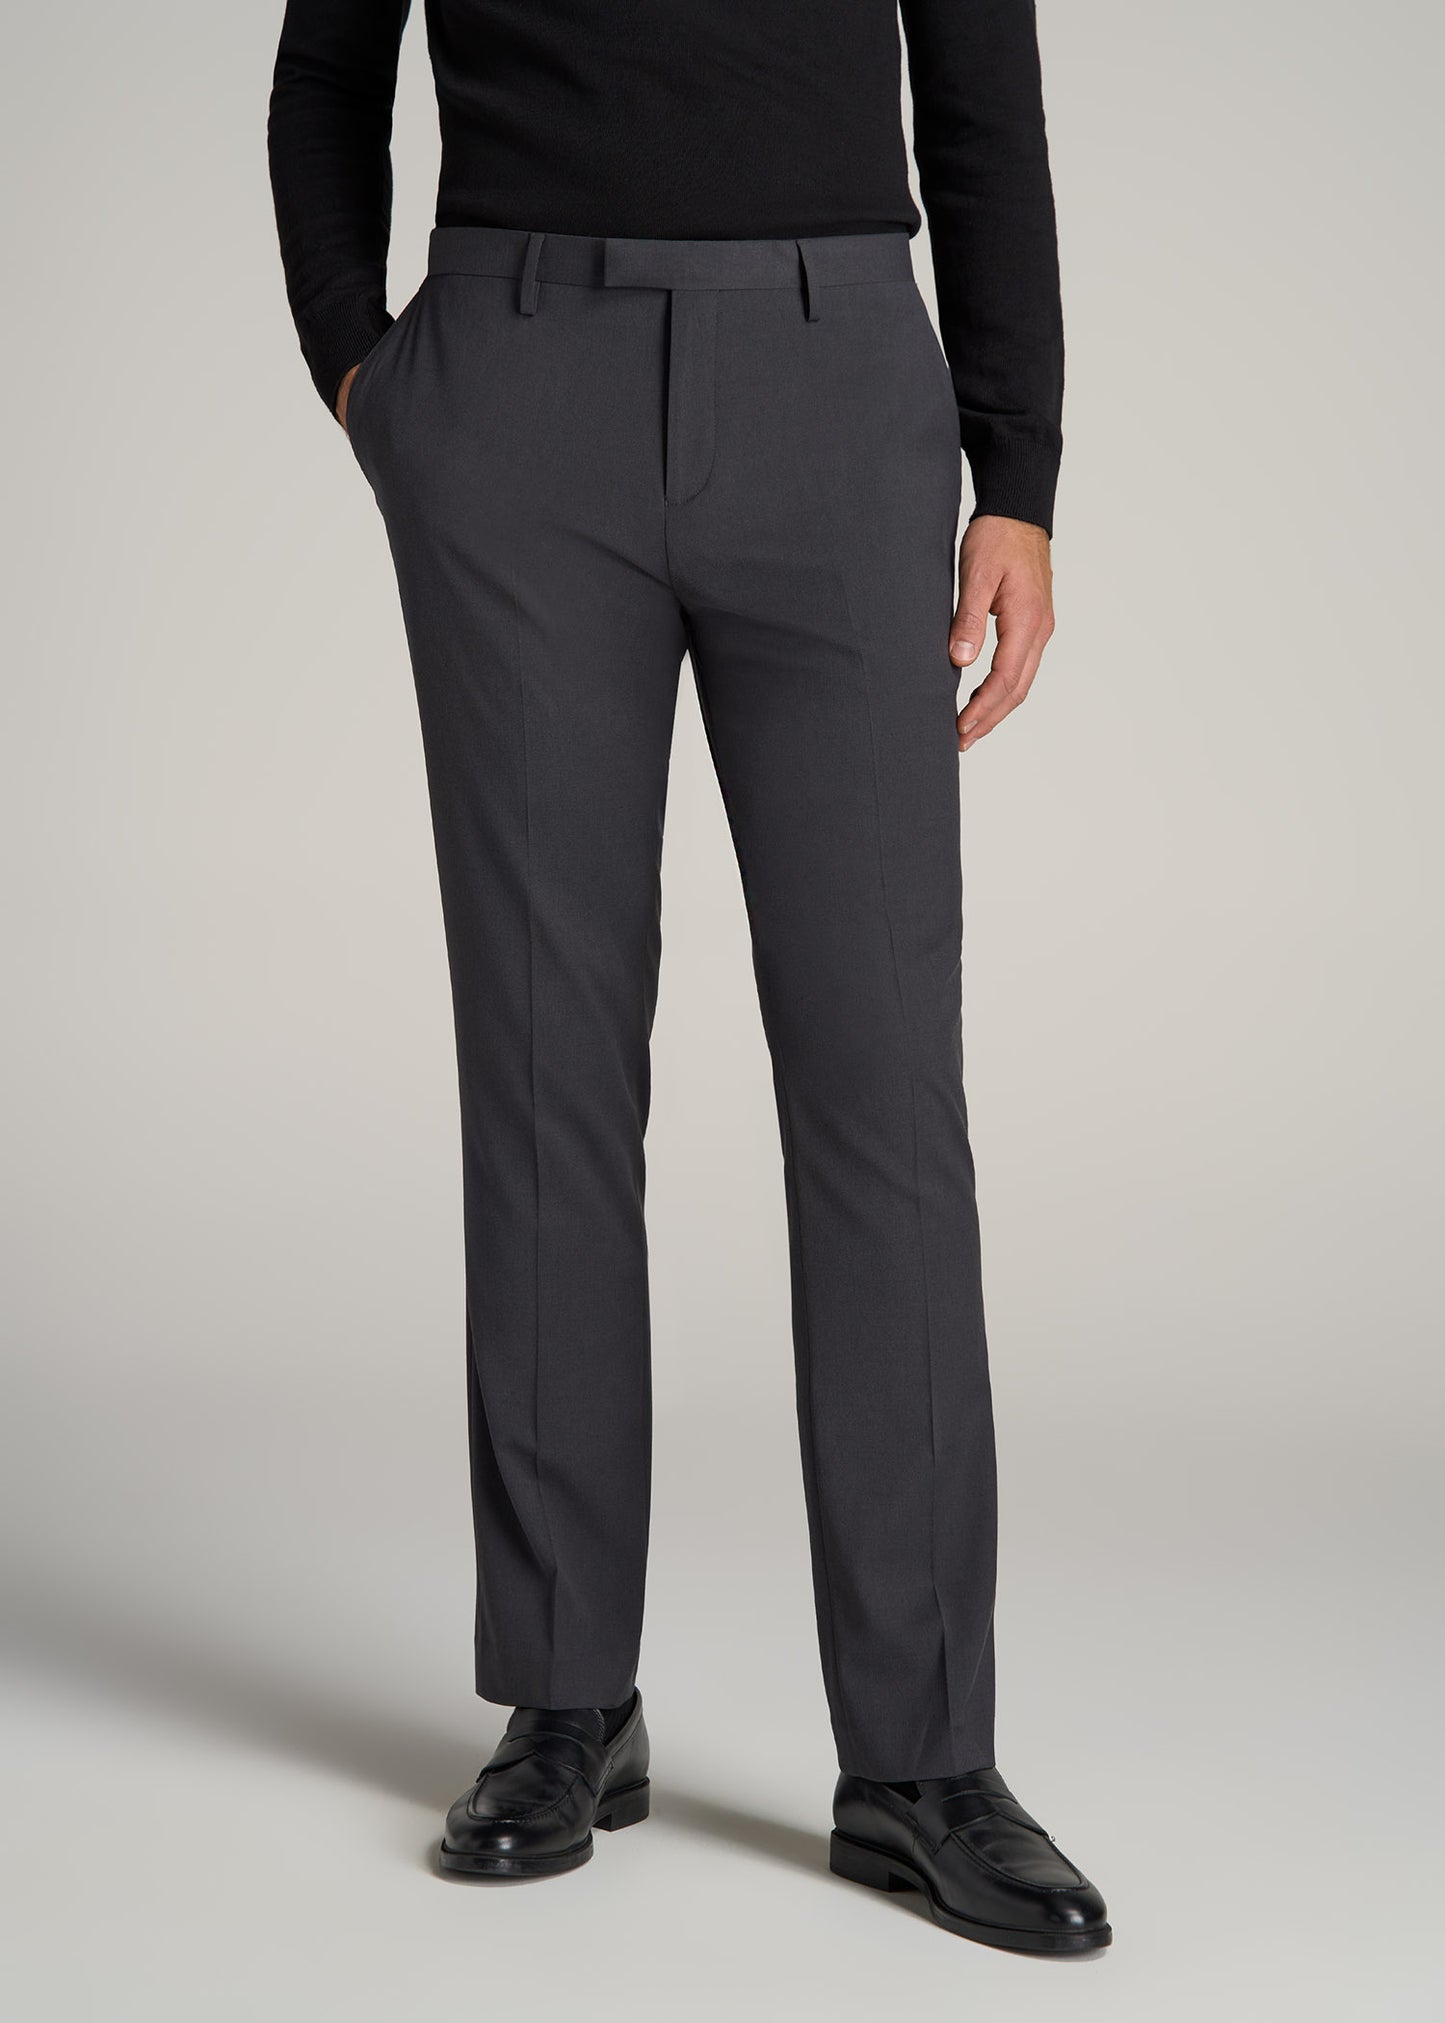 Suit Trousers for Men, Black, Grey & More